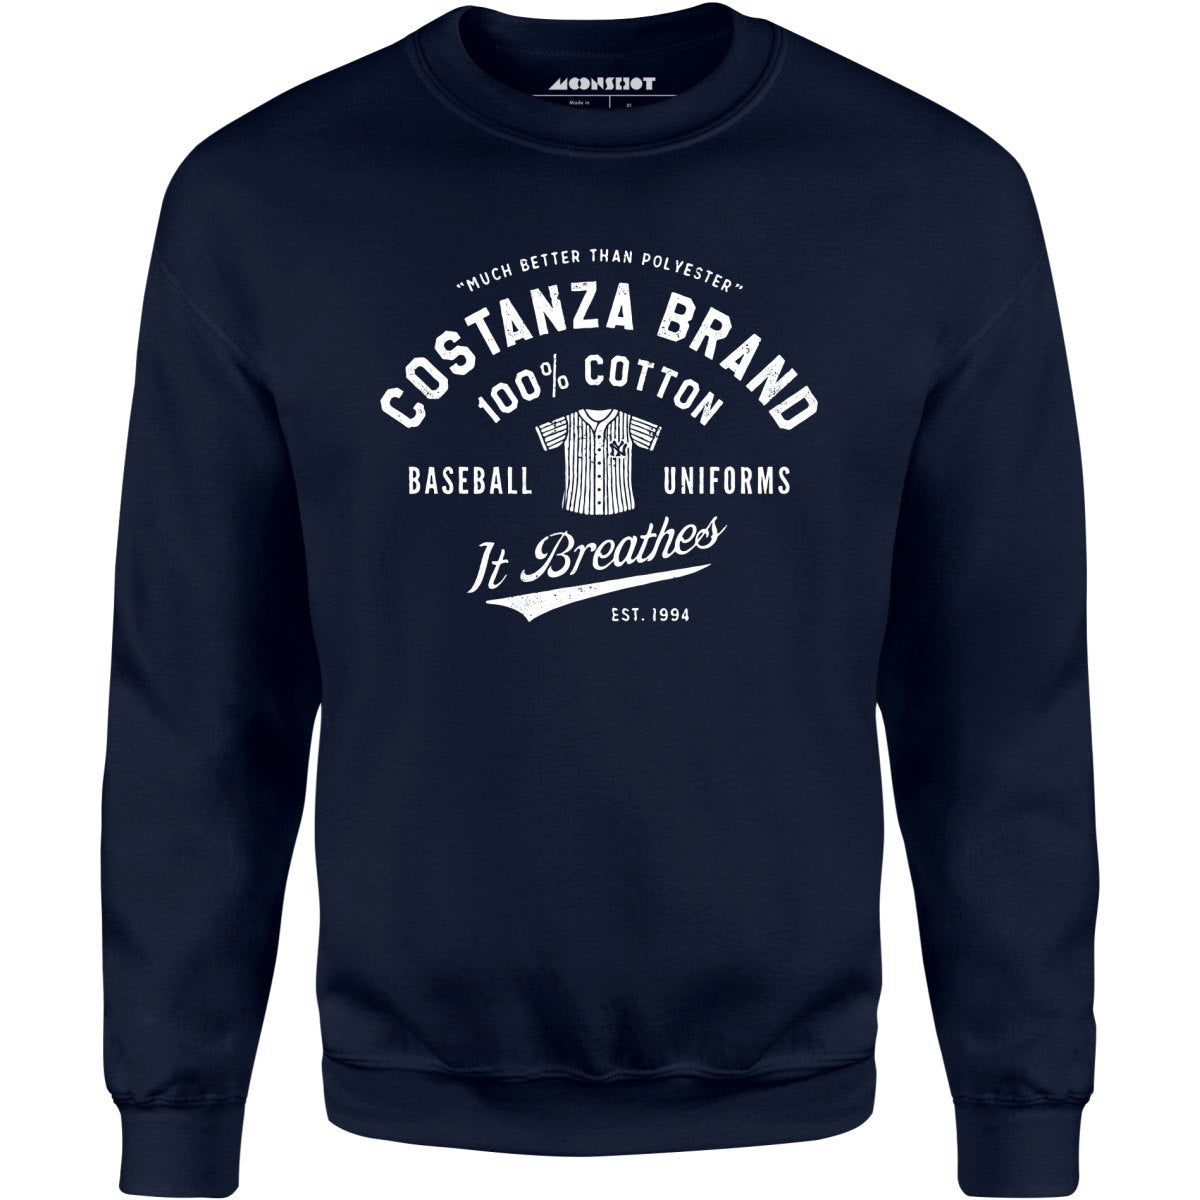 Costanza Brand Cotton Baseball Uniforms - Unisex Sweatshirt